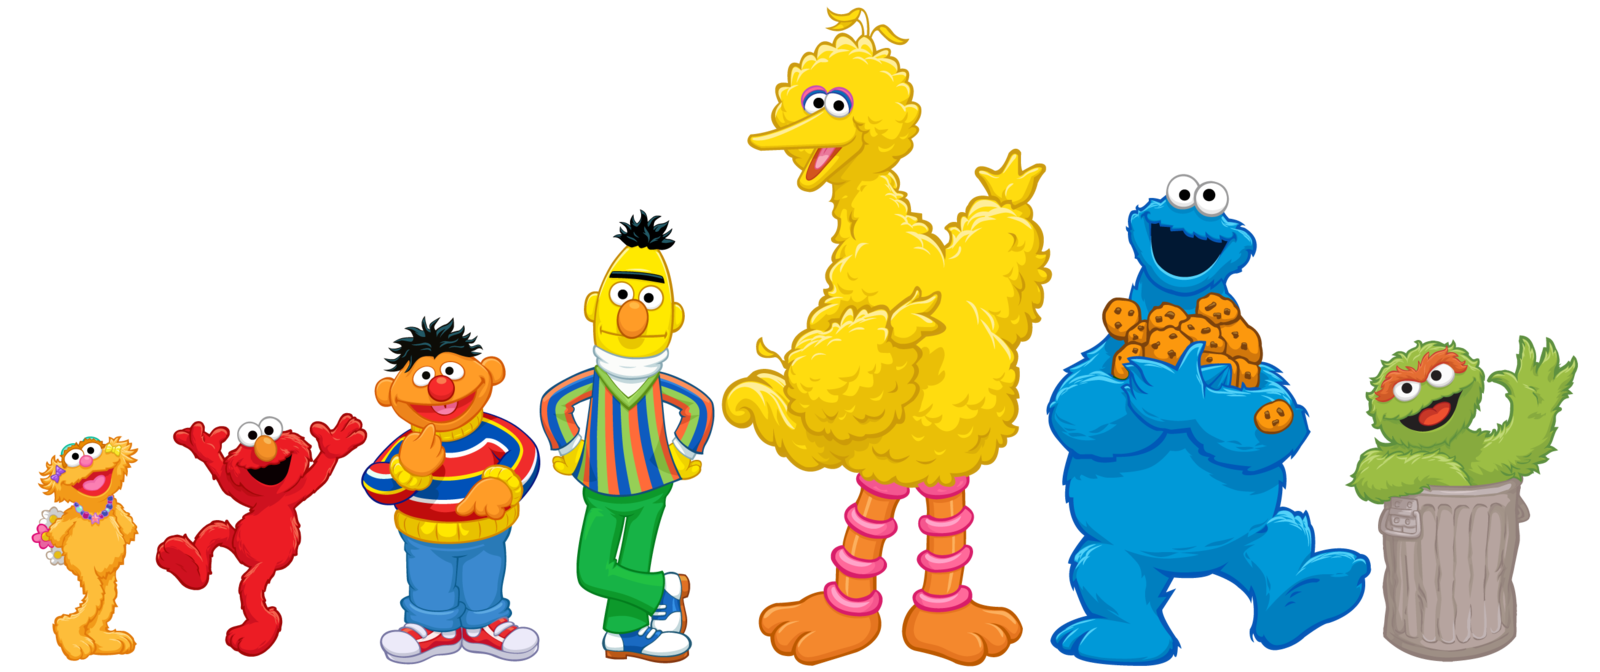 Sesame street characters.